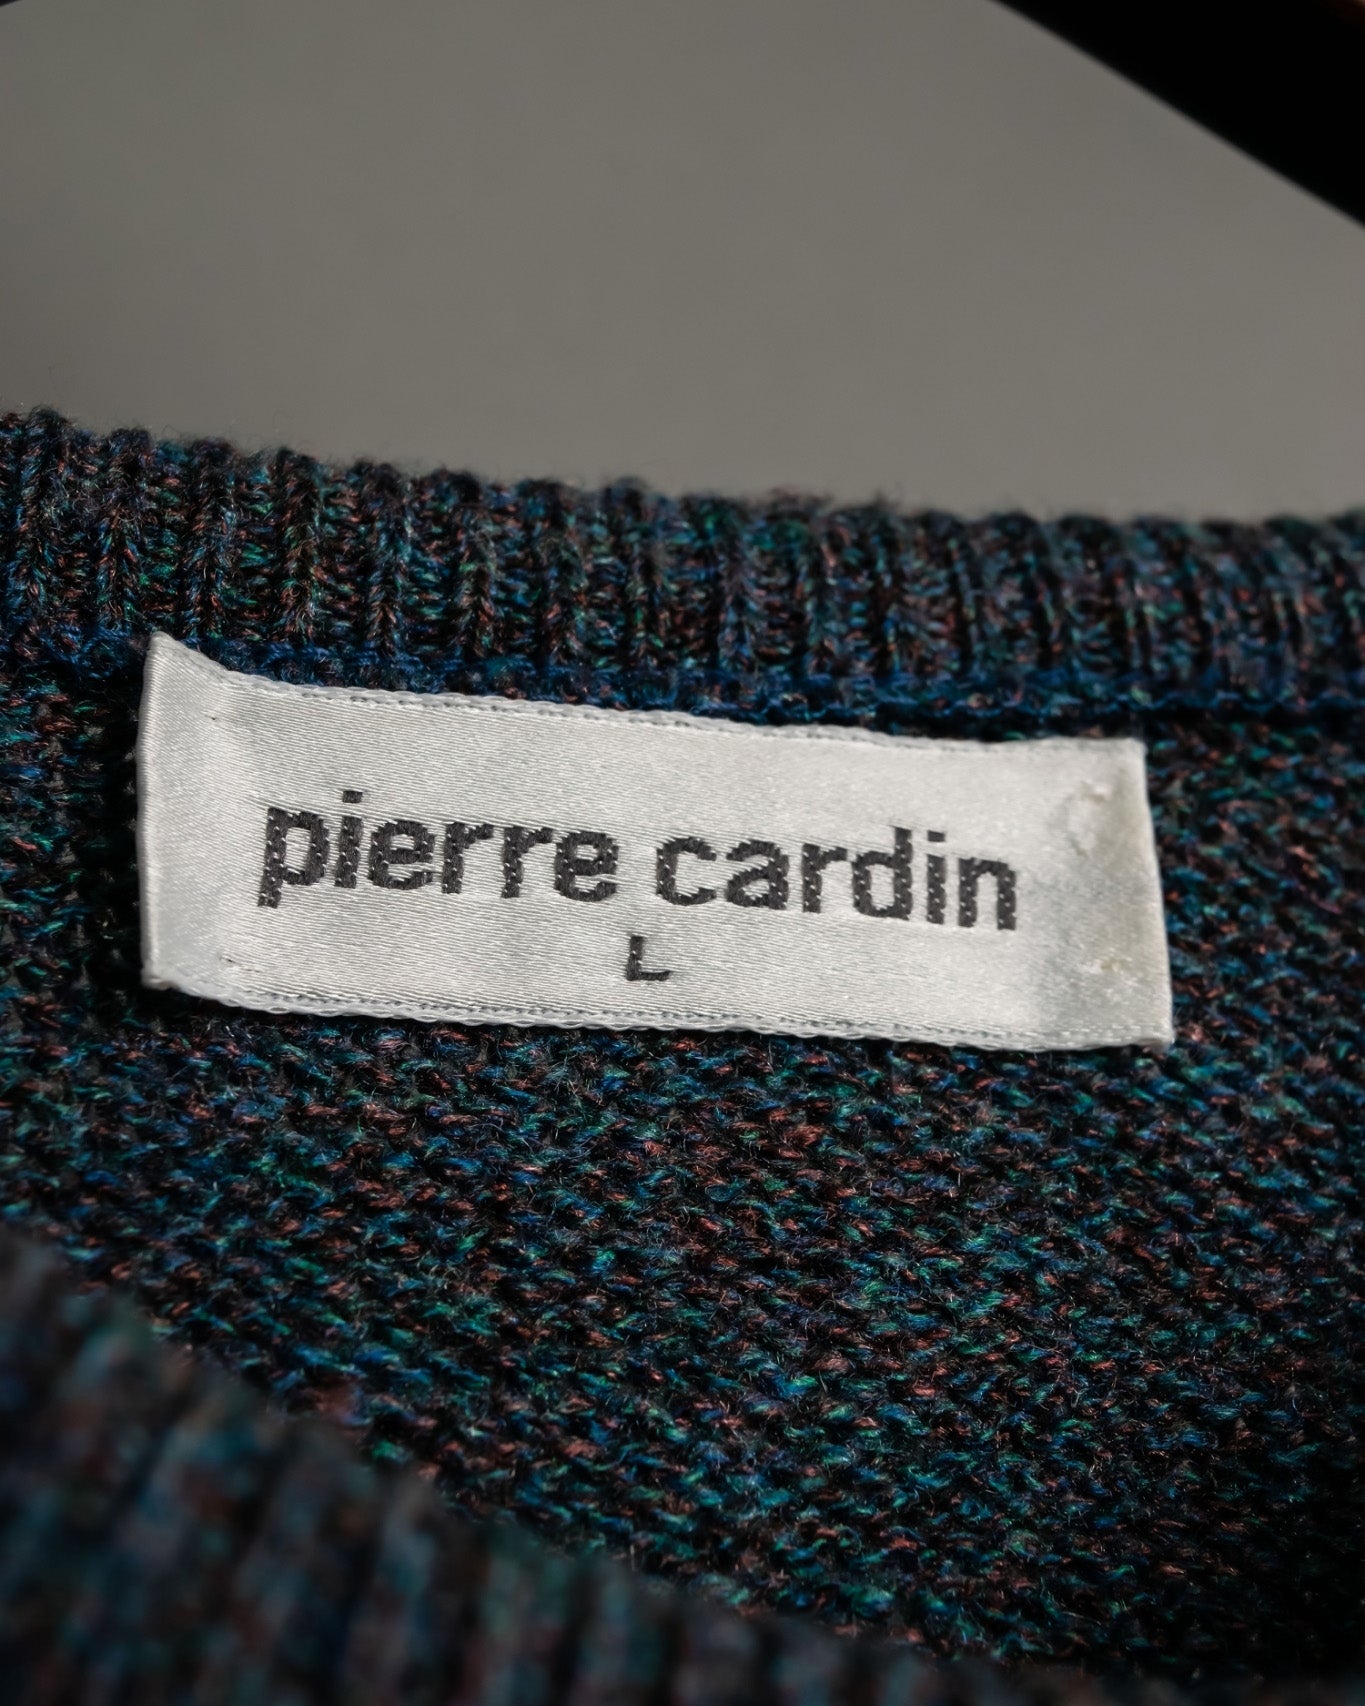 "Pierre Cardin" Three-Dimensional Knitting Dripping Diamond Knit